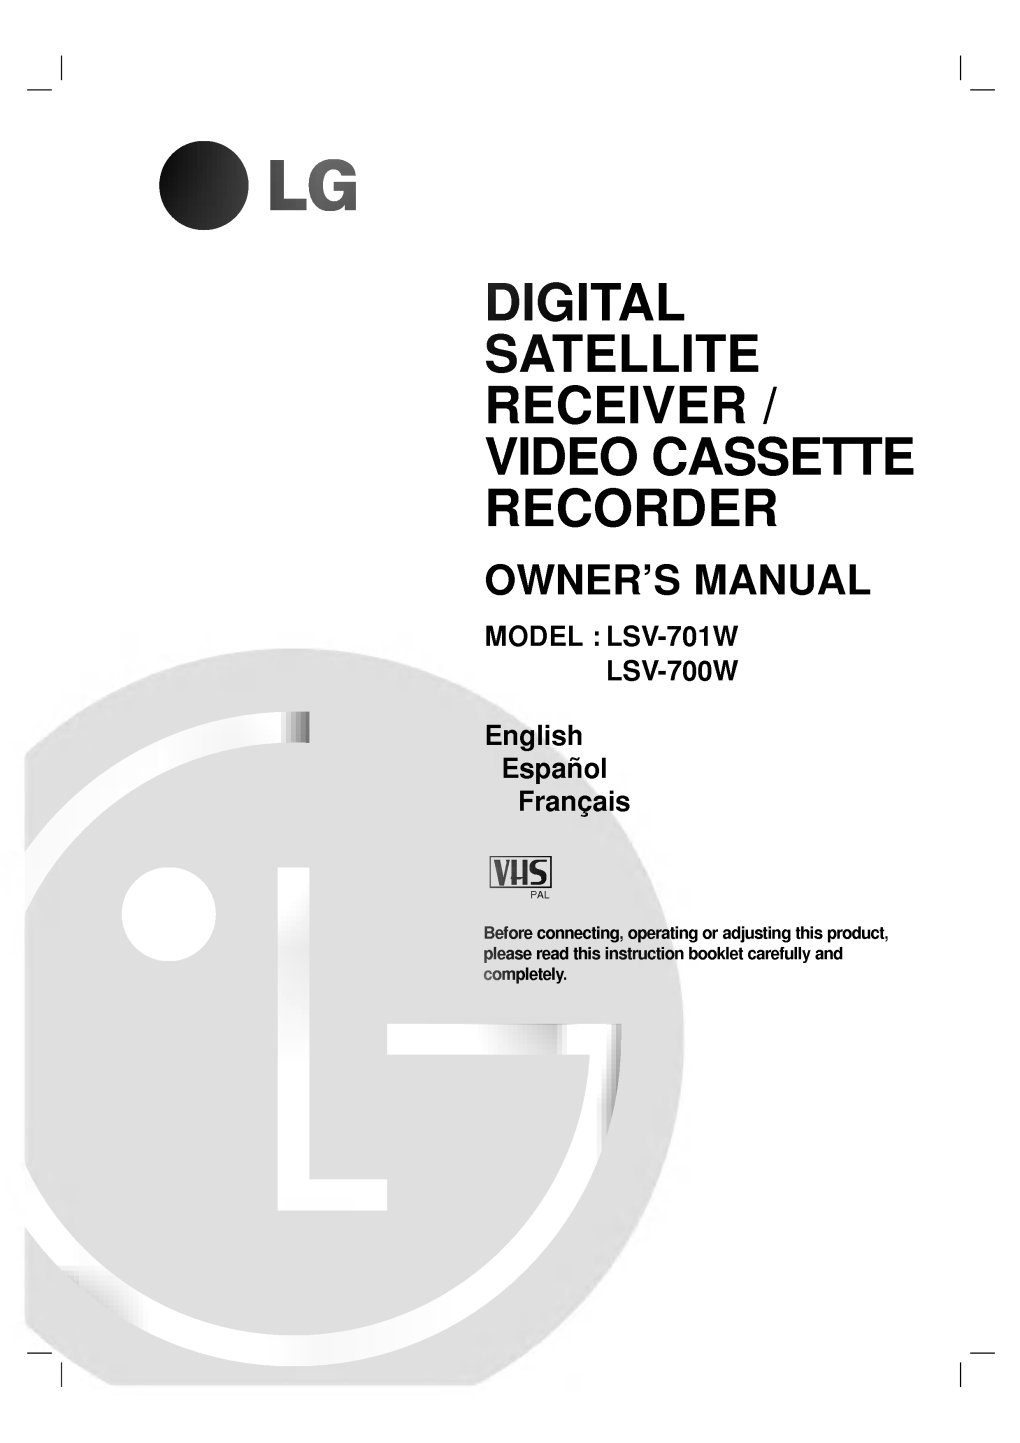 Digital Satellite Receiver / Video Cassette Recorder